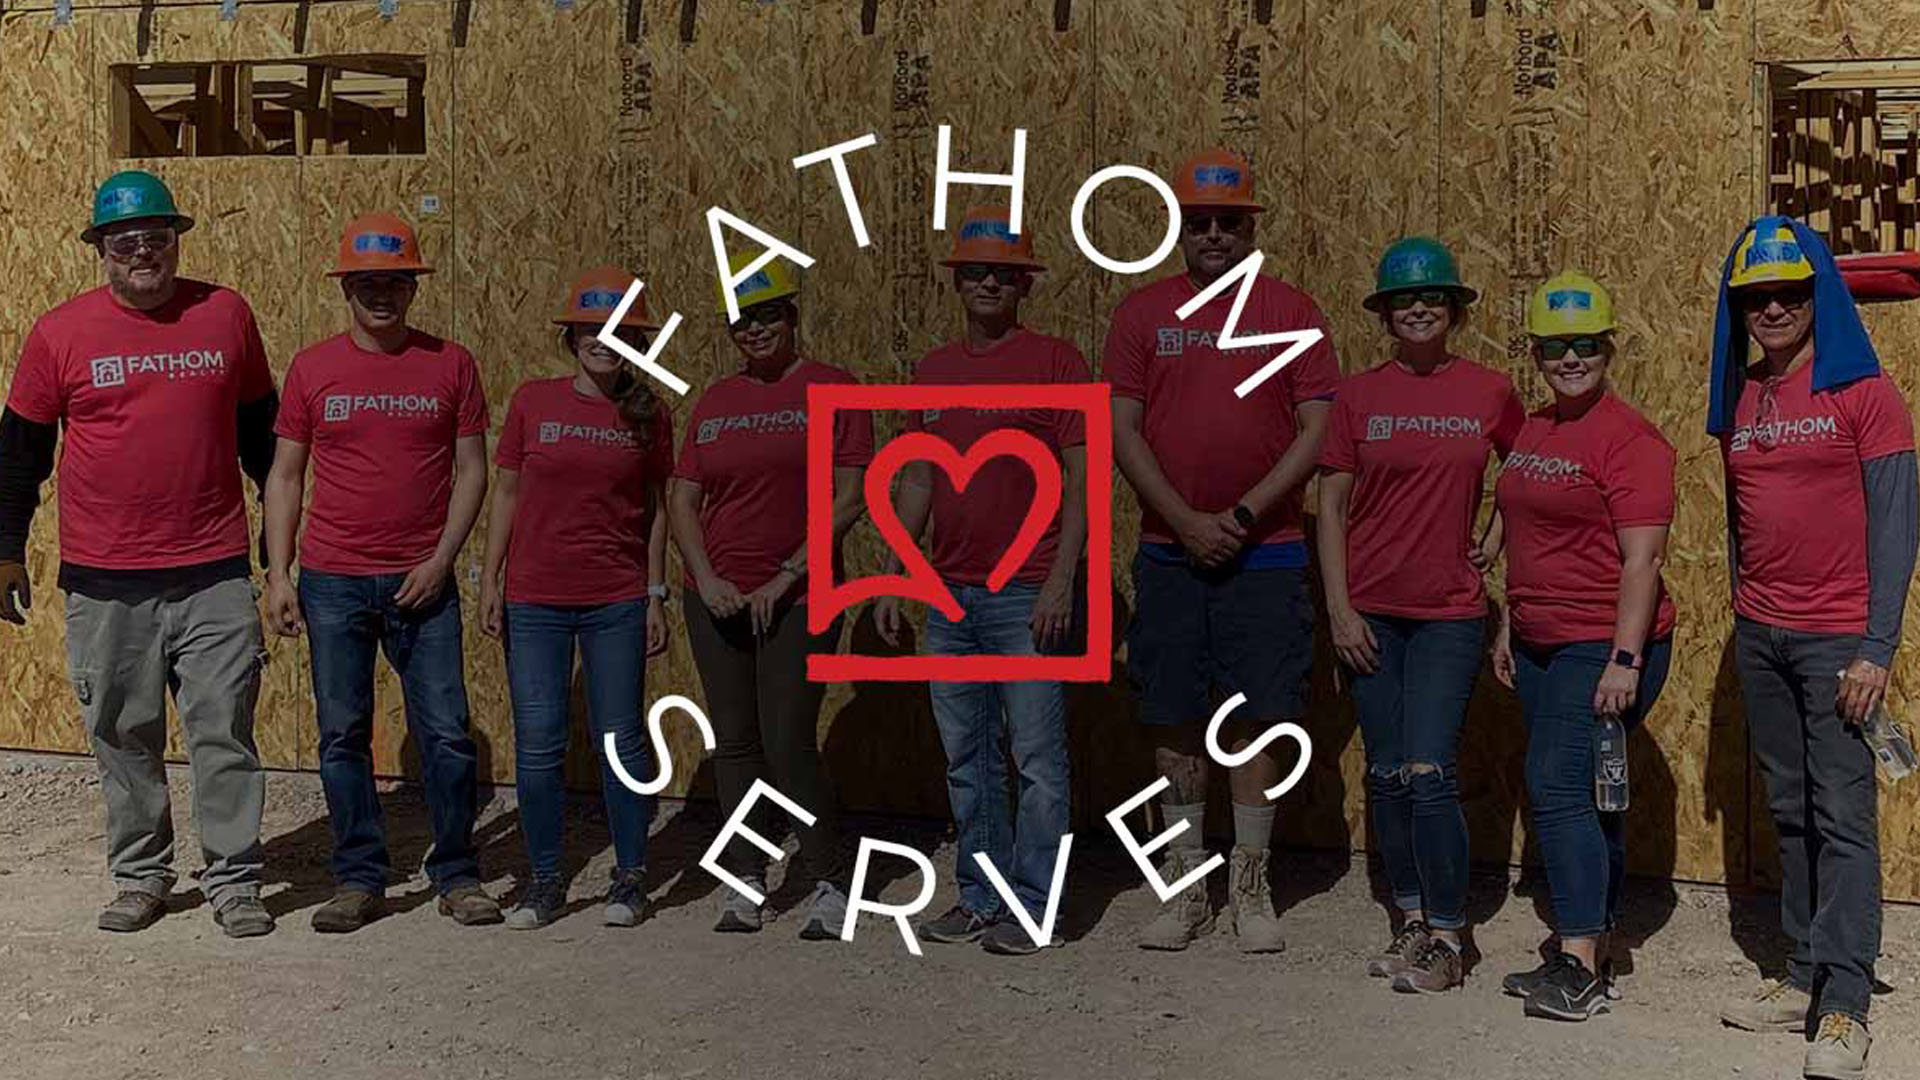 Featured image for “Fathom Holdings Announces Annual Fathom Serves Event”